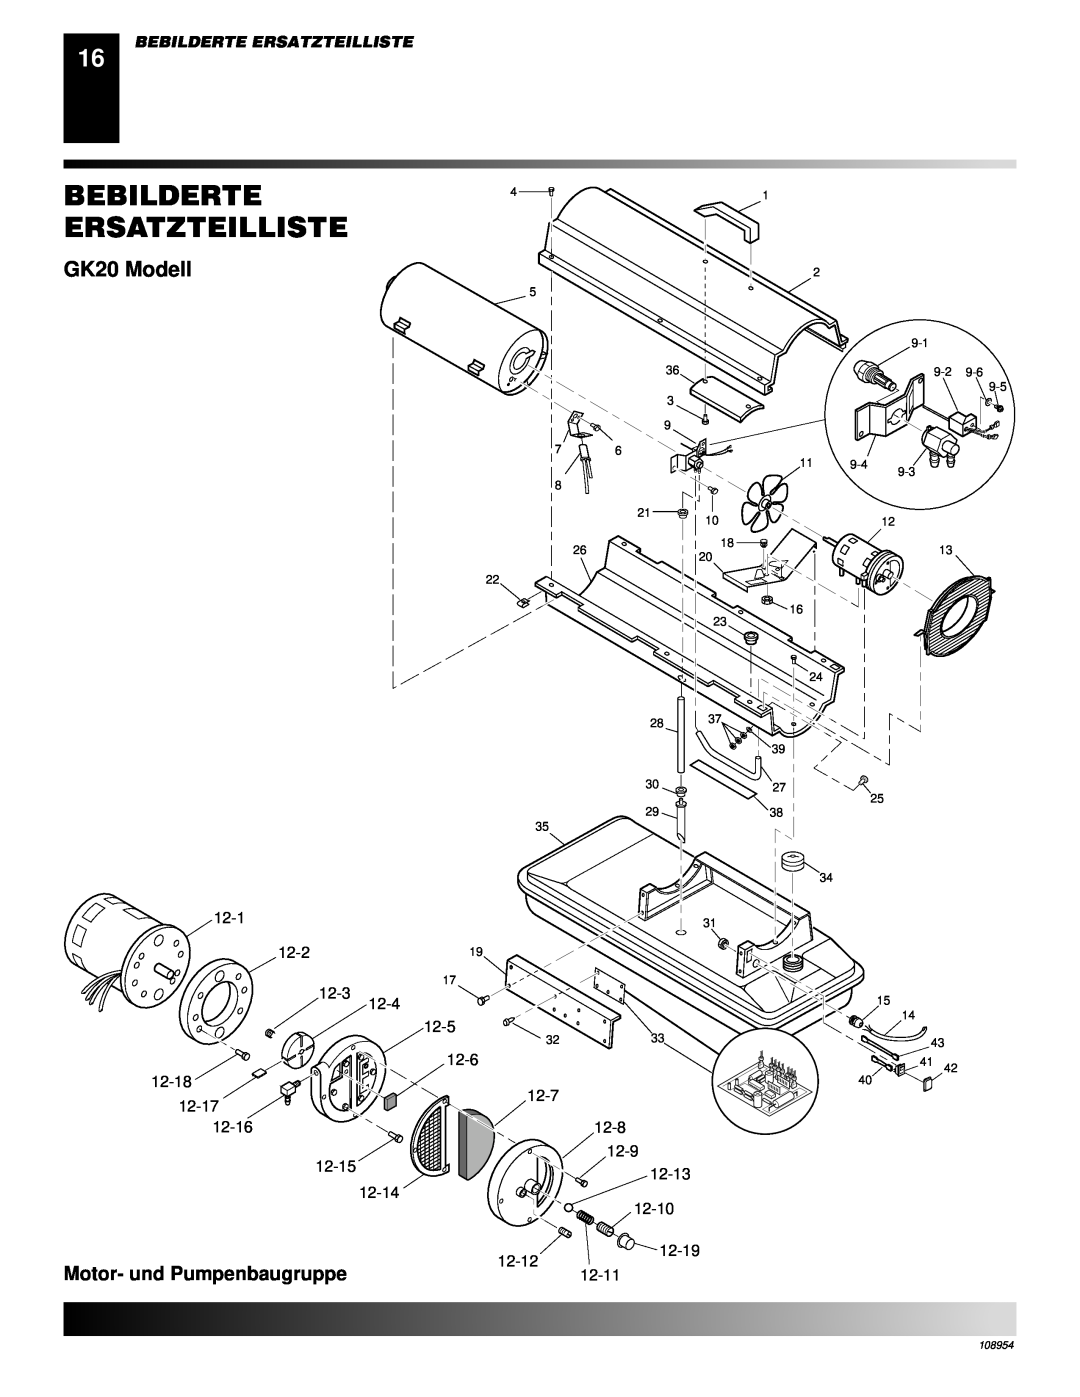 Desa GK30 owner manual Bebilderte Ersatzteilliste, GK20 Modell, Motor- und Pumpenbaugruppe 